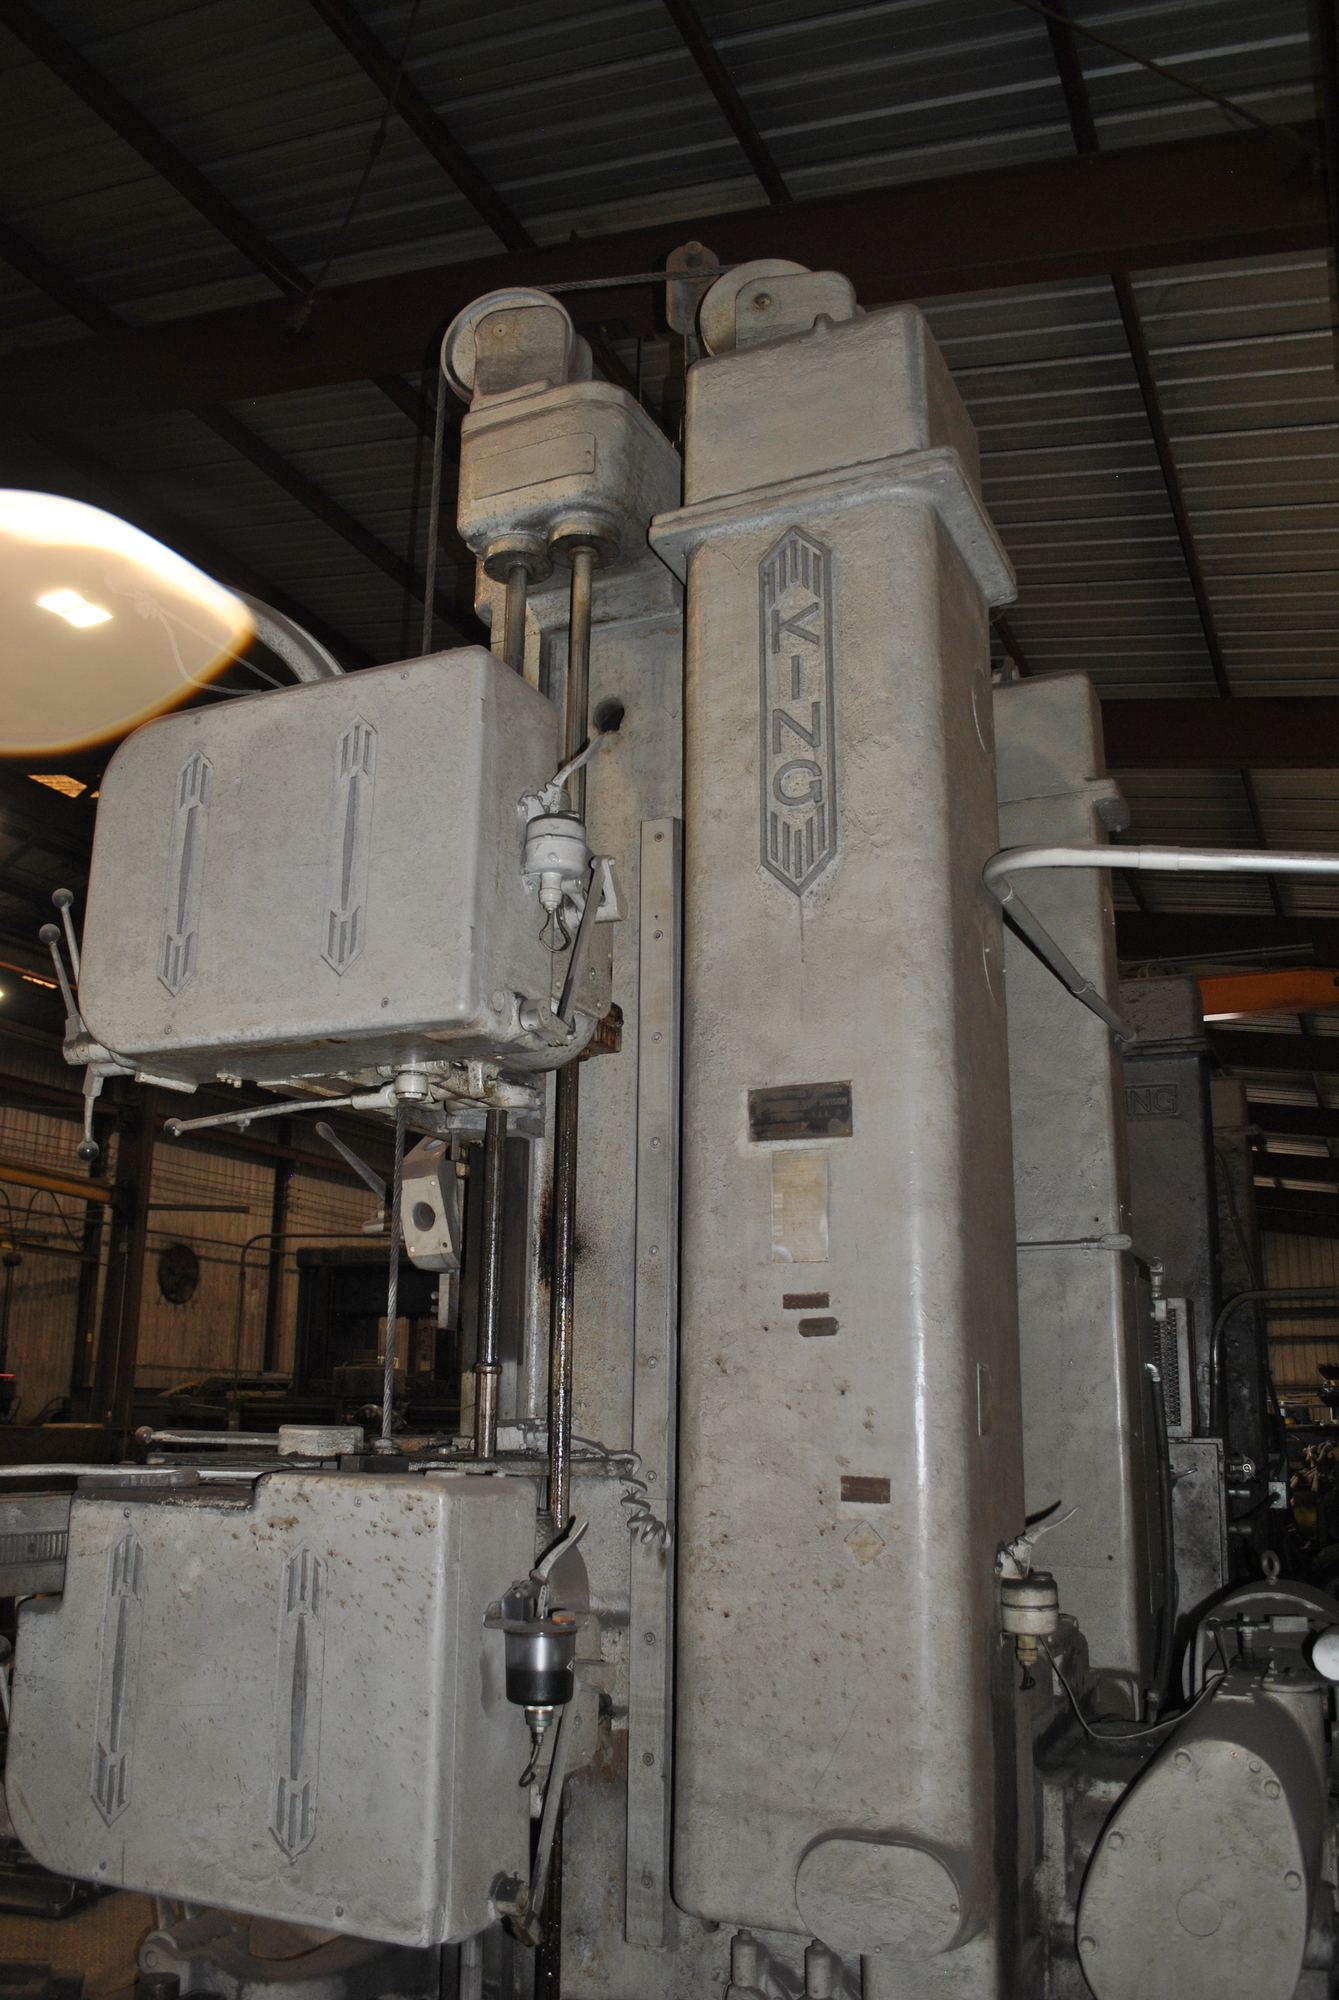 KING 52 Boring Mills, Vertical Boring Mills | Gulf Coast Machinery, LLC